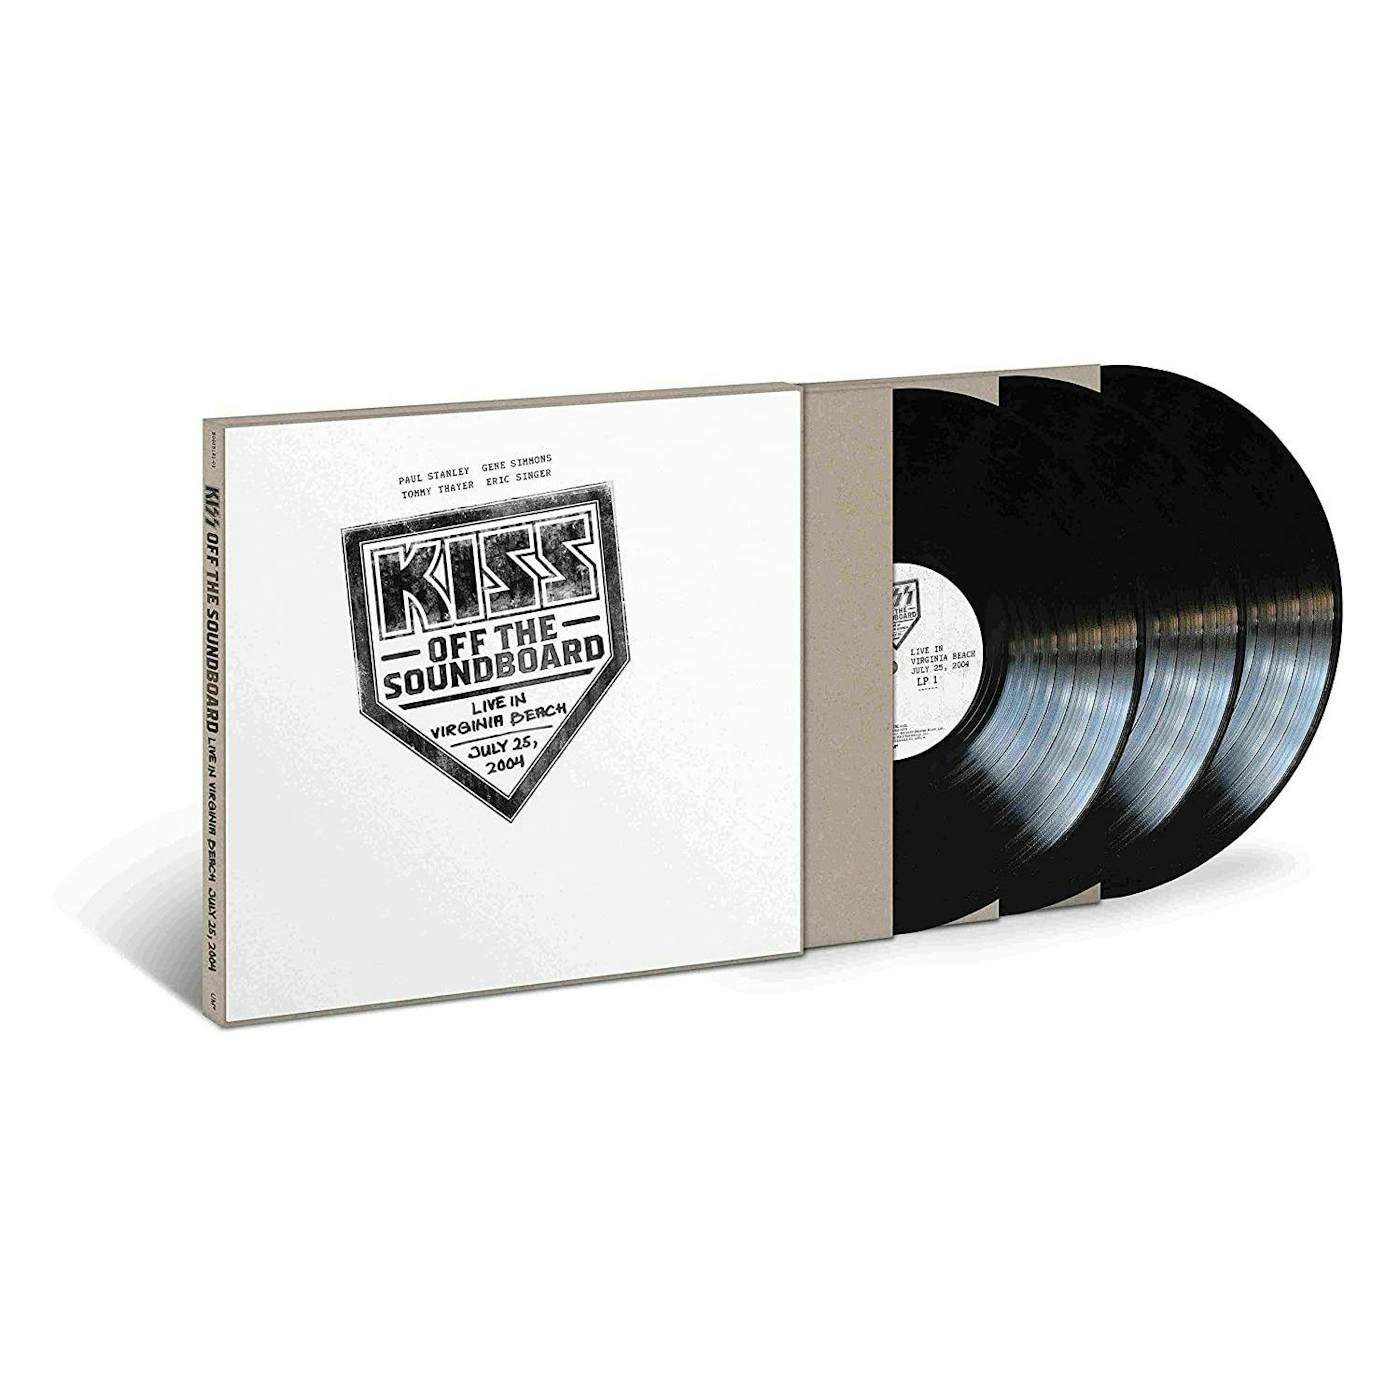 KISS Off The Soundboard: Live In Virginia Beach Vinyl Record